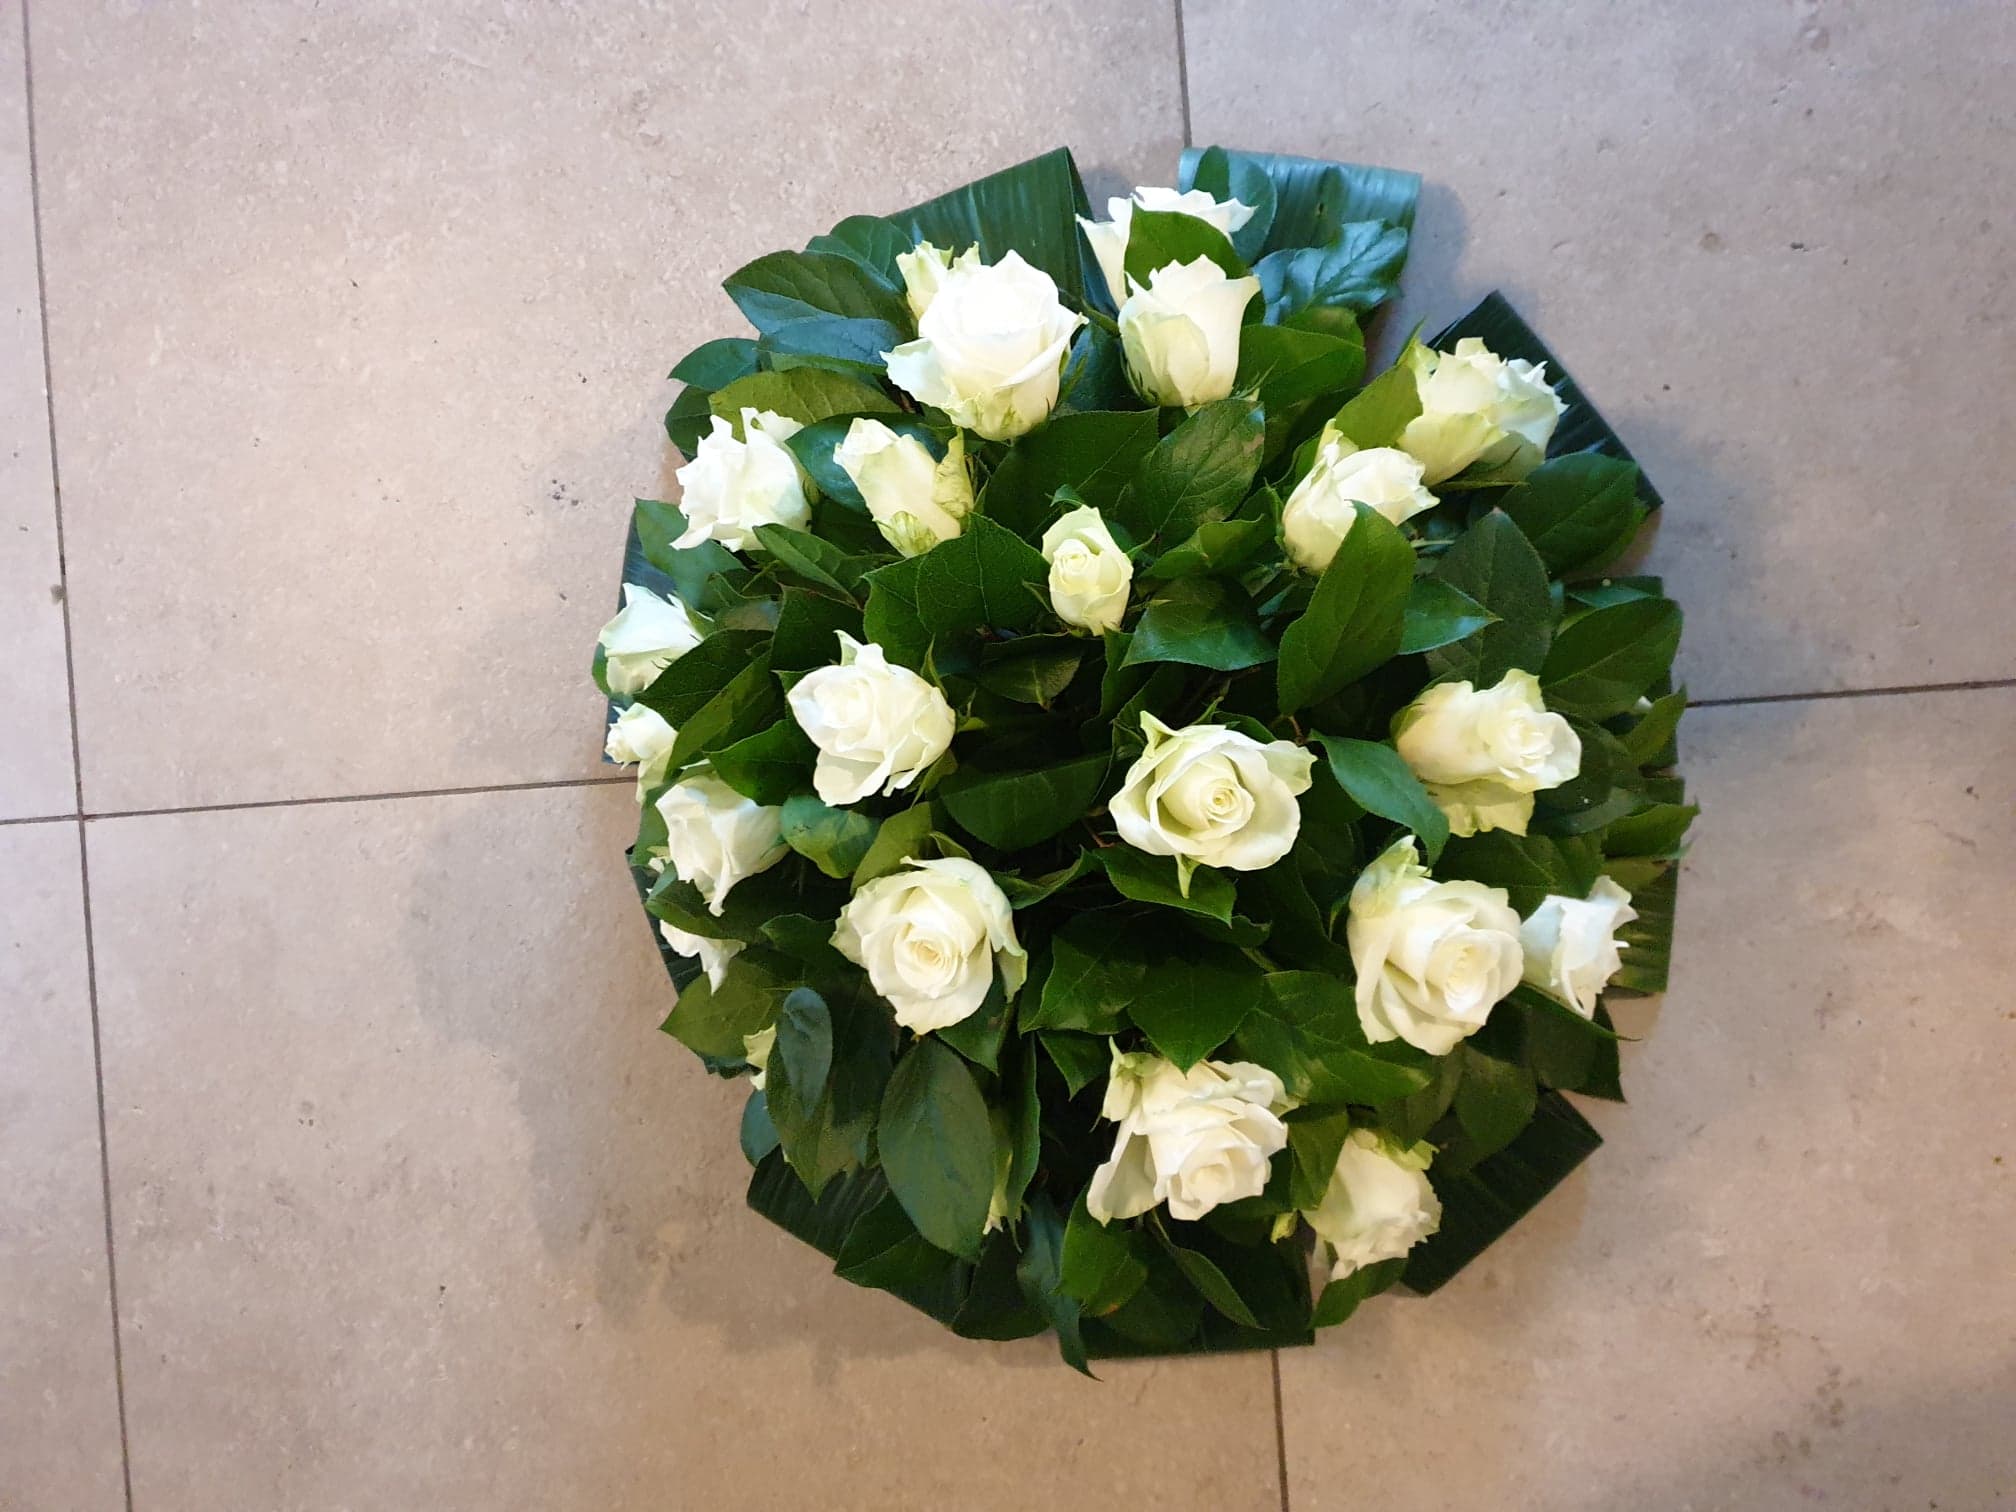 Nr 87 rond bloemstuk met witte rozen 50 cm